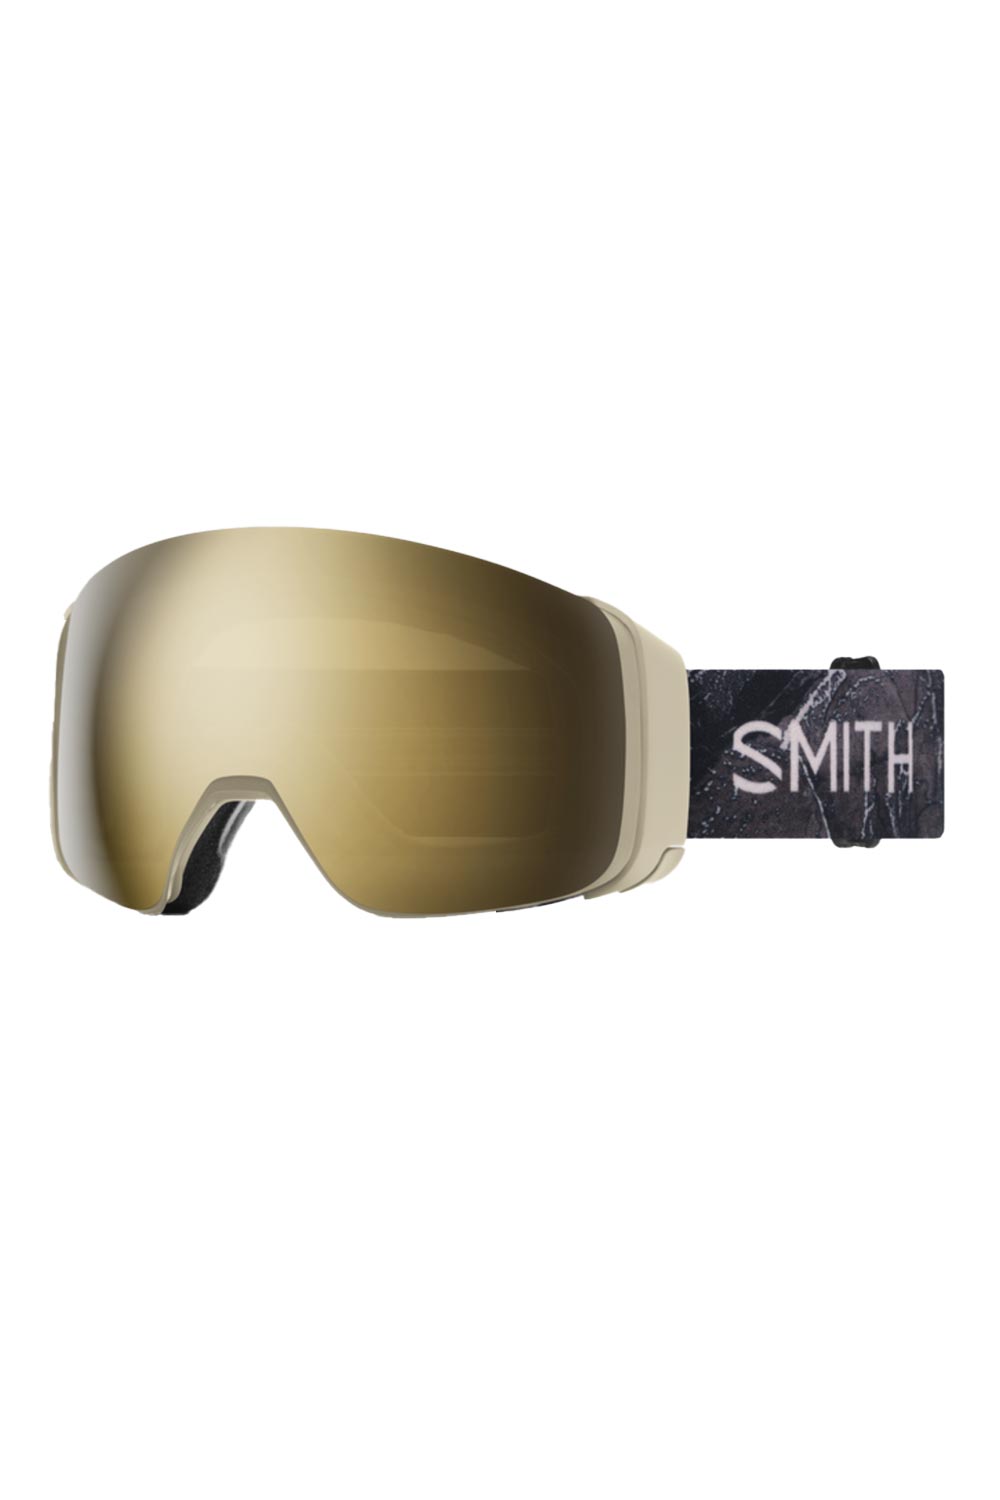 Smith 4D Mag ski goggles,  gold lens